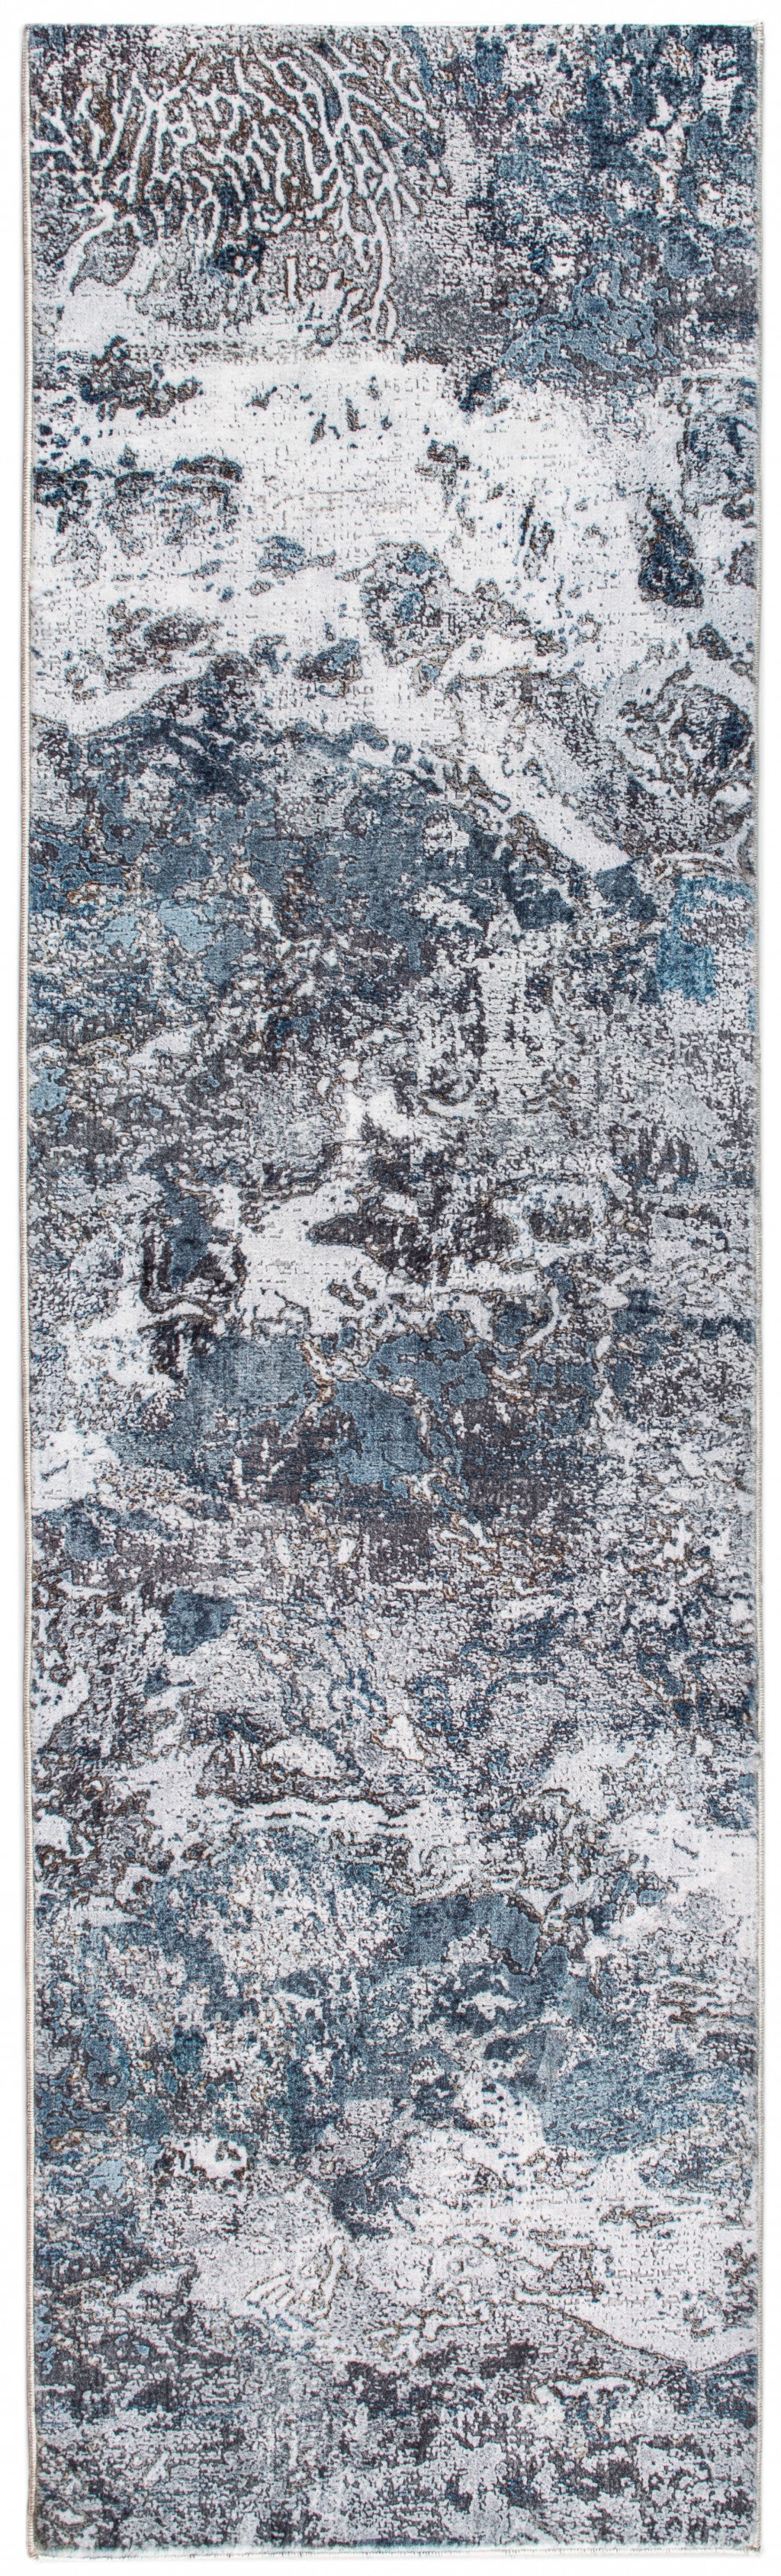 6’ x 9’ Gray Blue Abstract Galaxy Area Rug